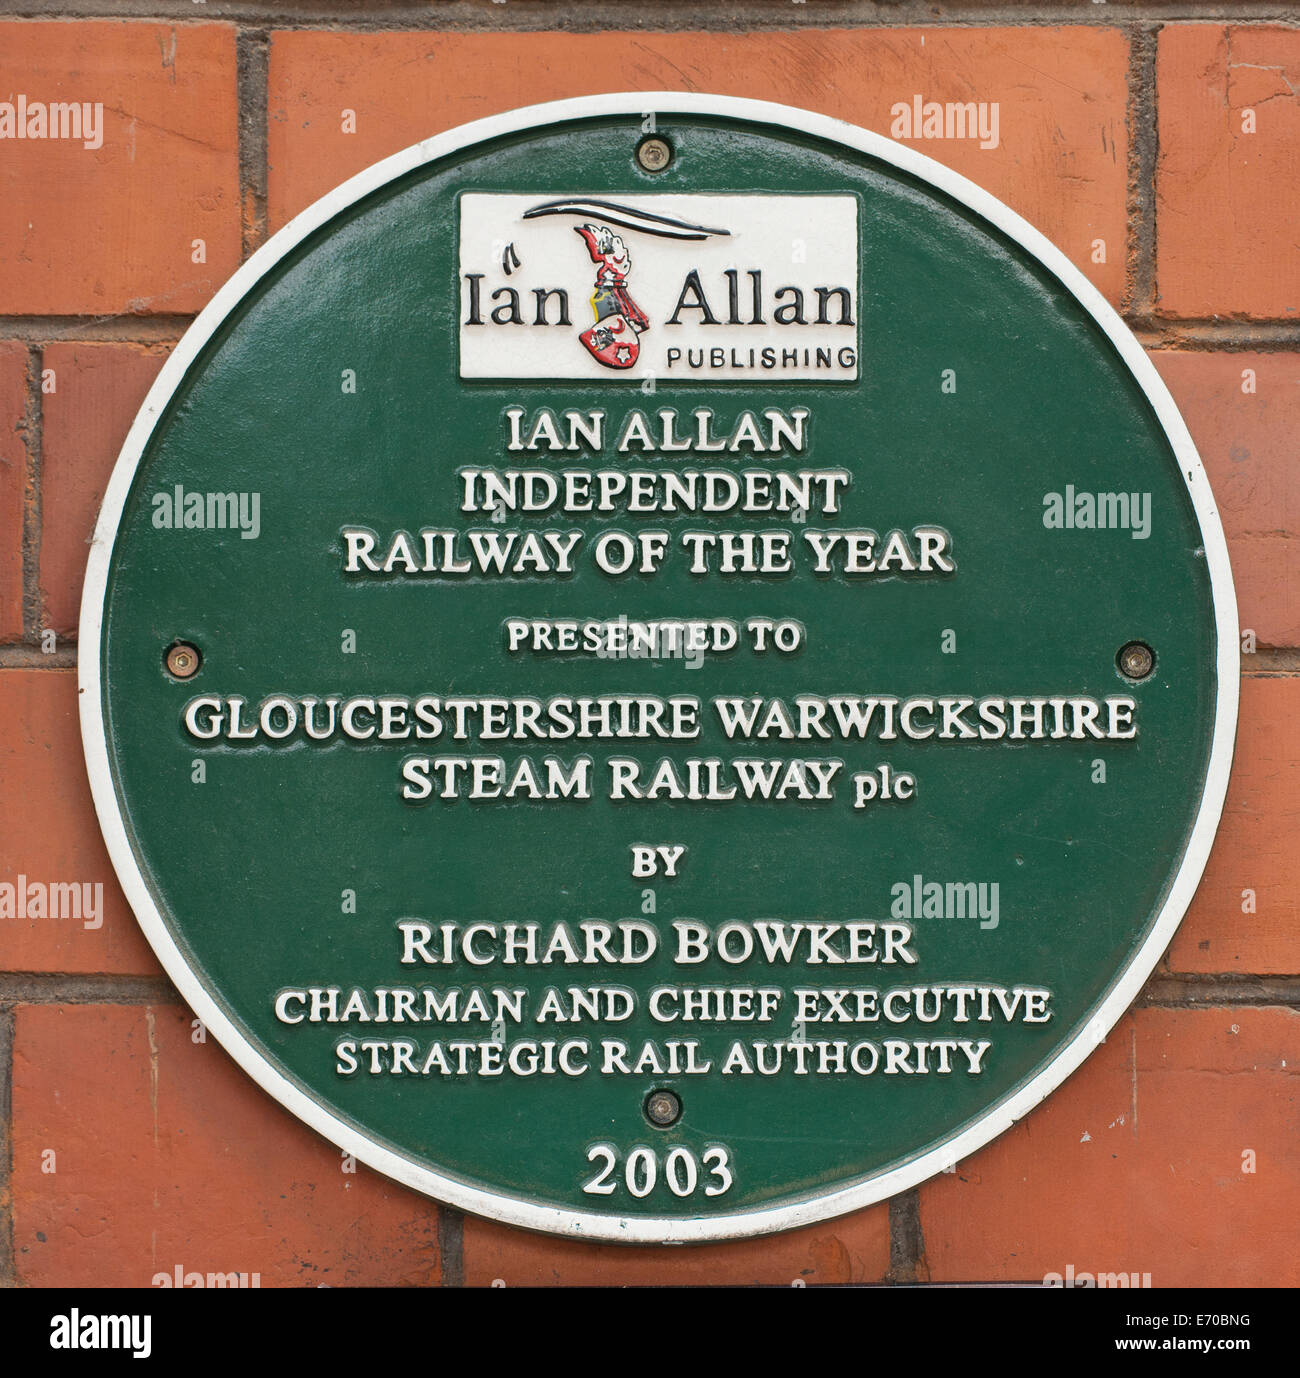 Green plaque awarded to Gloucestershire Warwickshire Steam Railway, at Teddington Railway Station, Gloucestershire, England, UK. Stock Photo